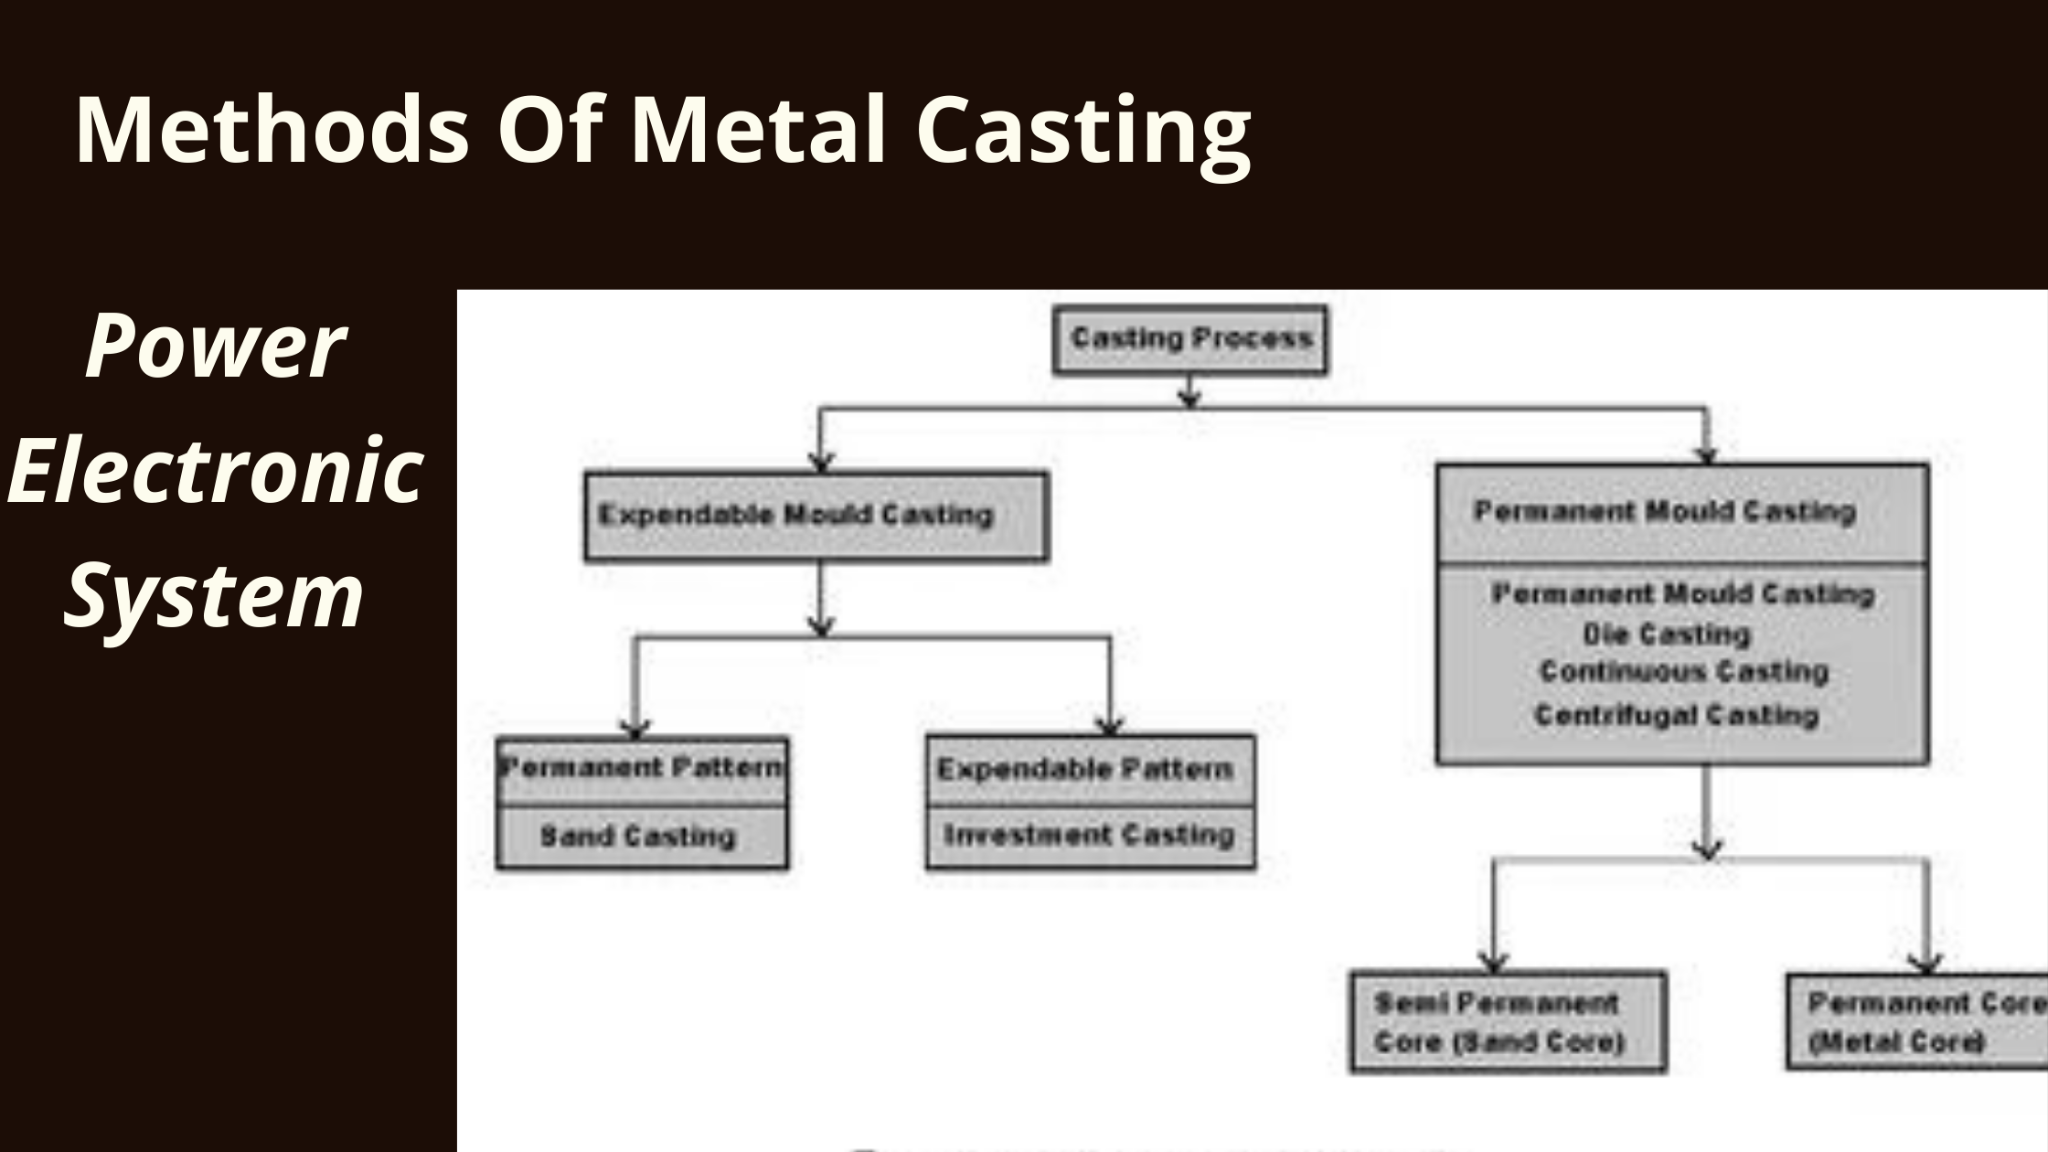 Methods of Metal Casting